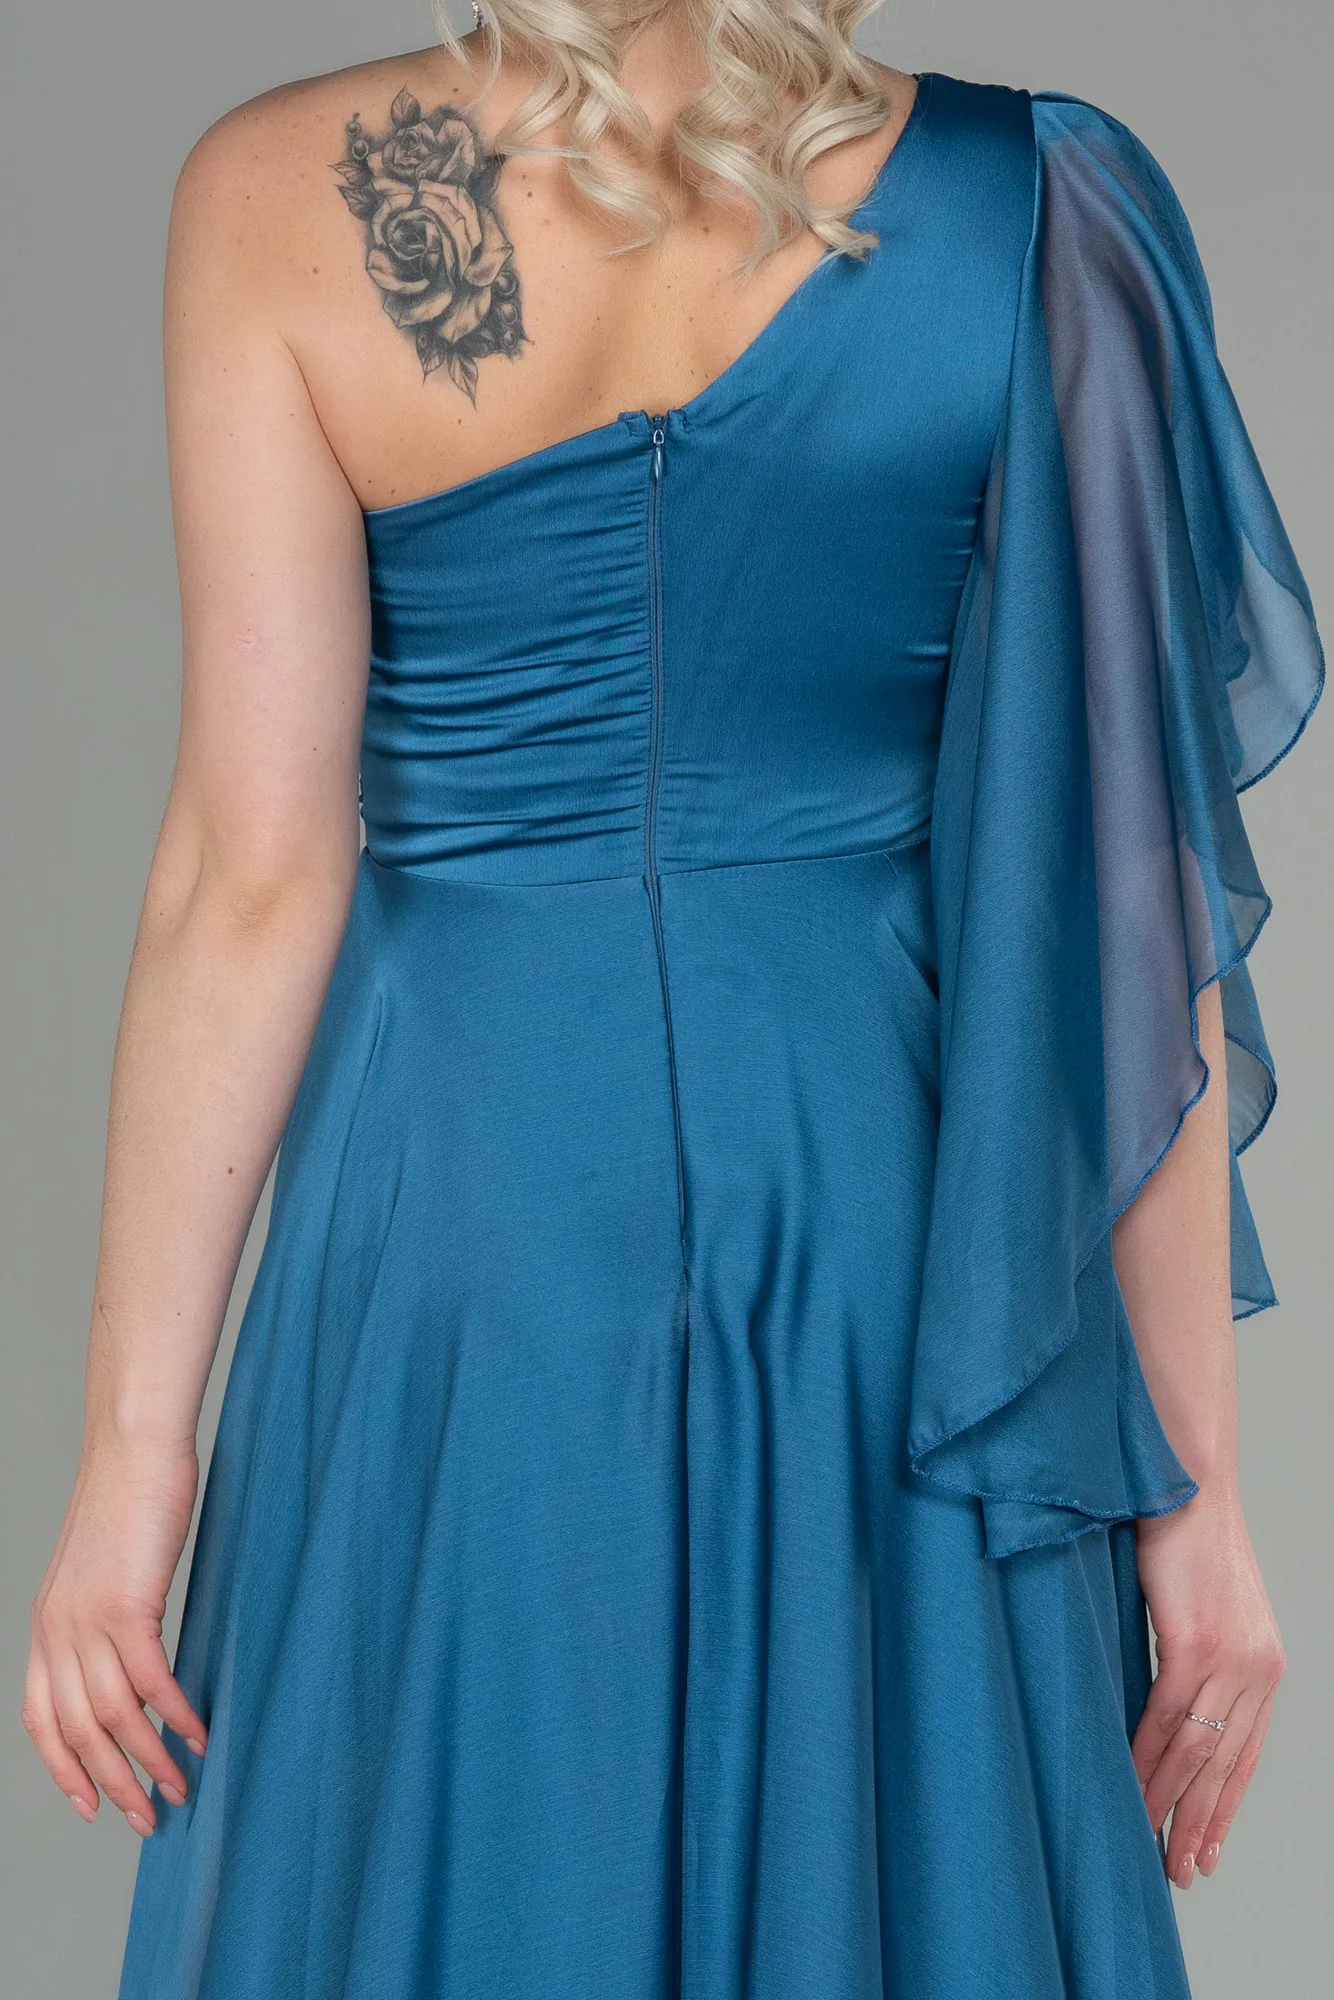 Blue-Long Chiffon Evening Dress ABU3449